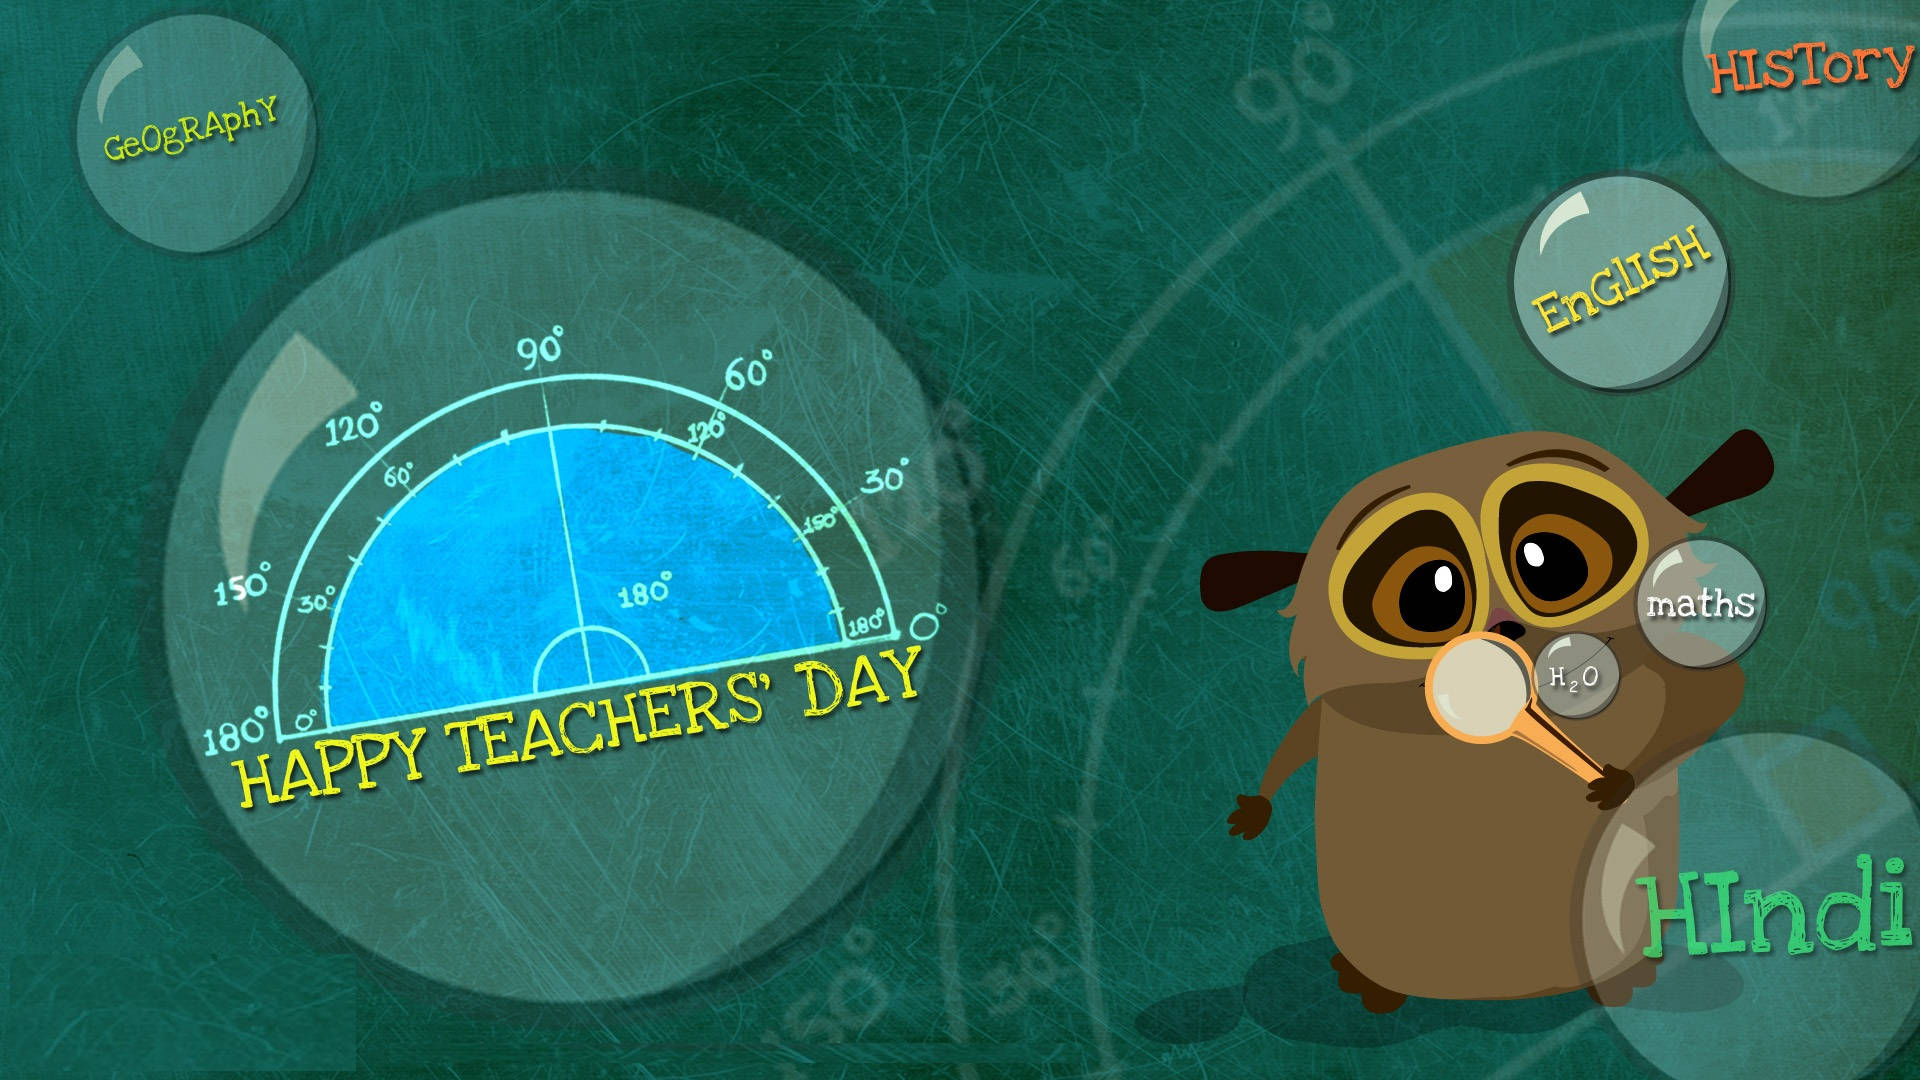 Happy Teachers' Day Tarsier